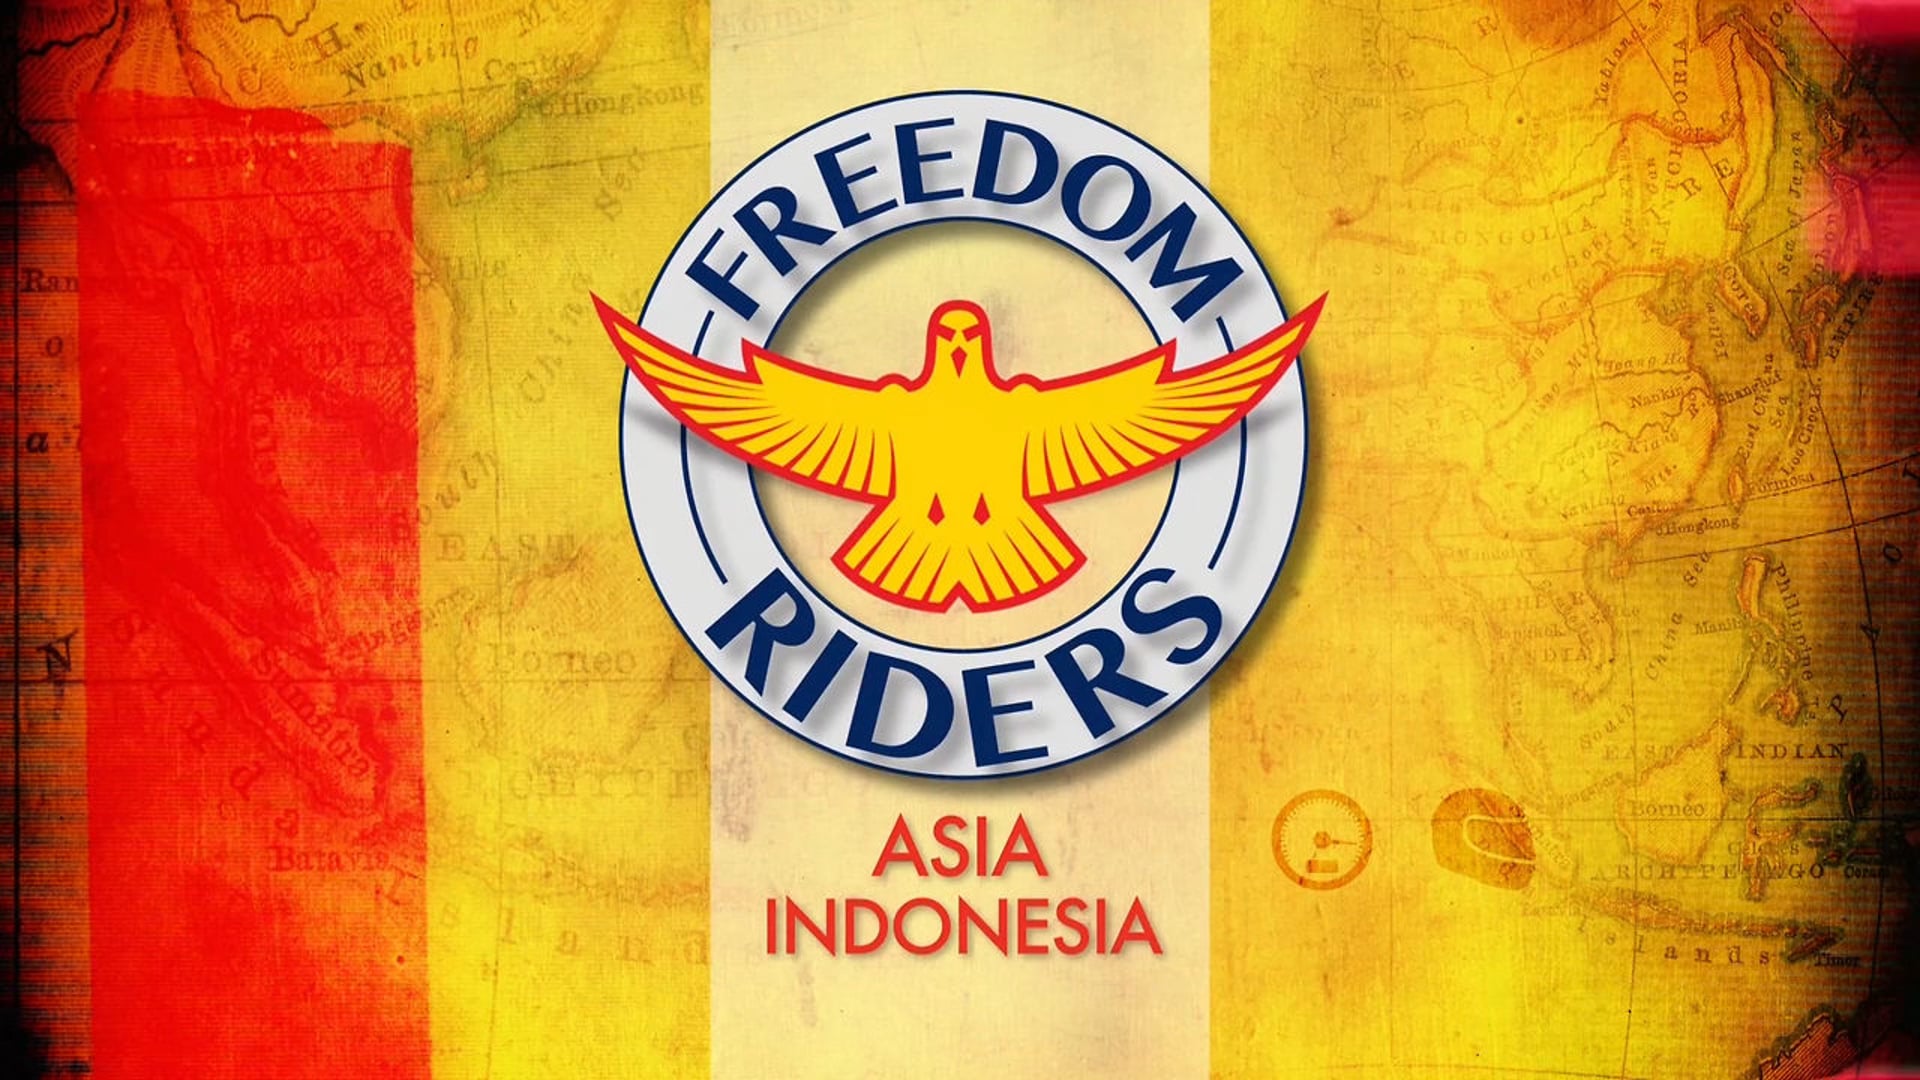 Freedom Riders Asia — Bali